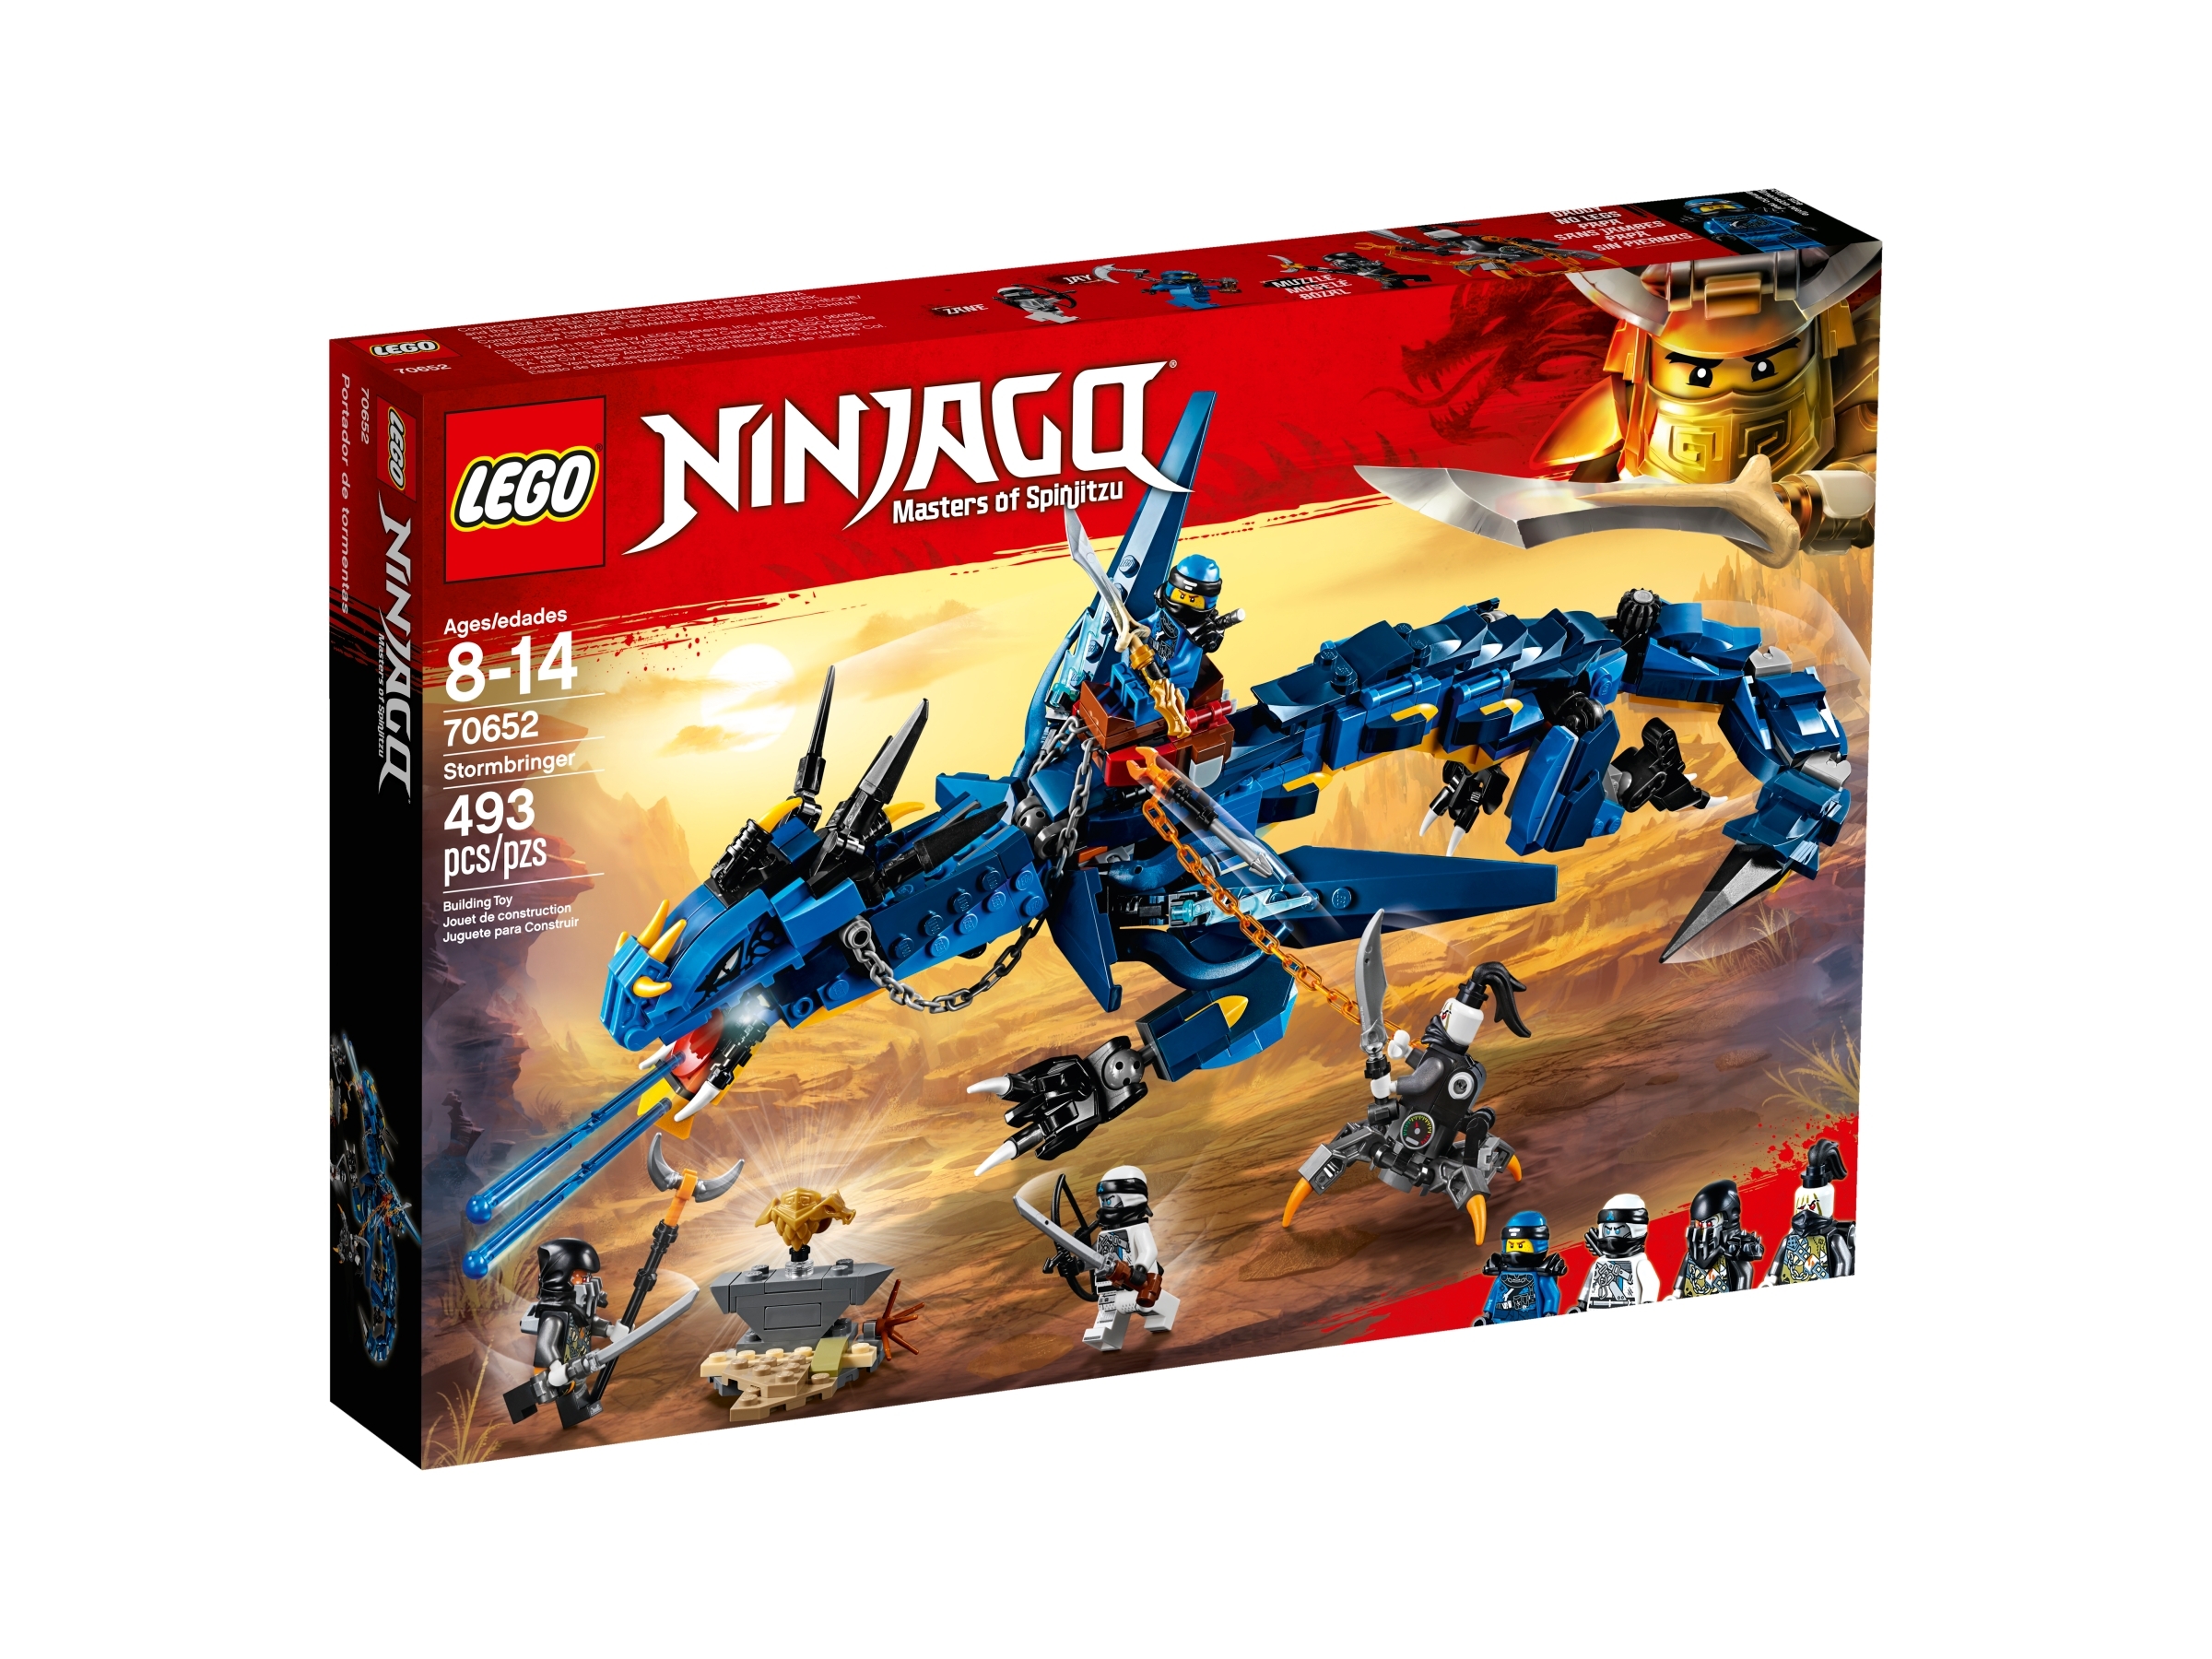 blue lego ninjago dragon